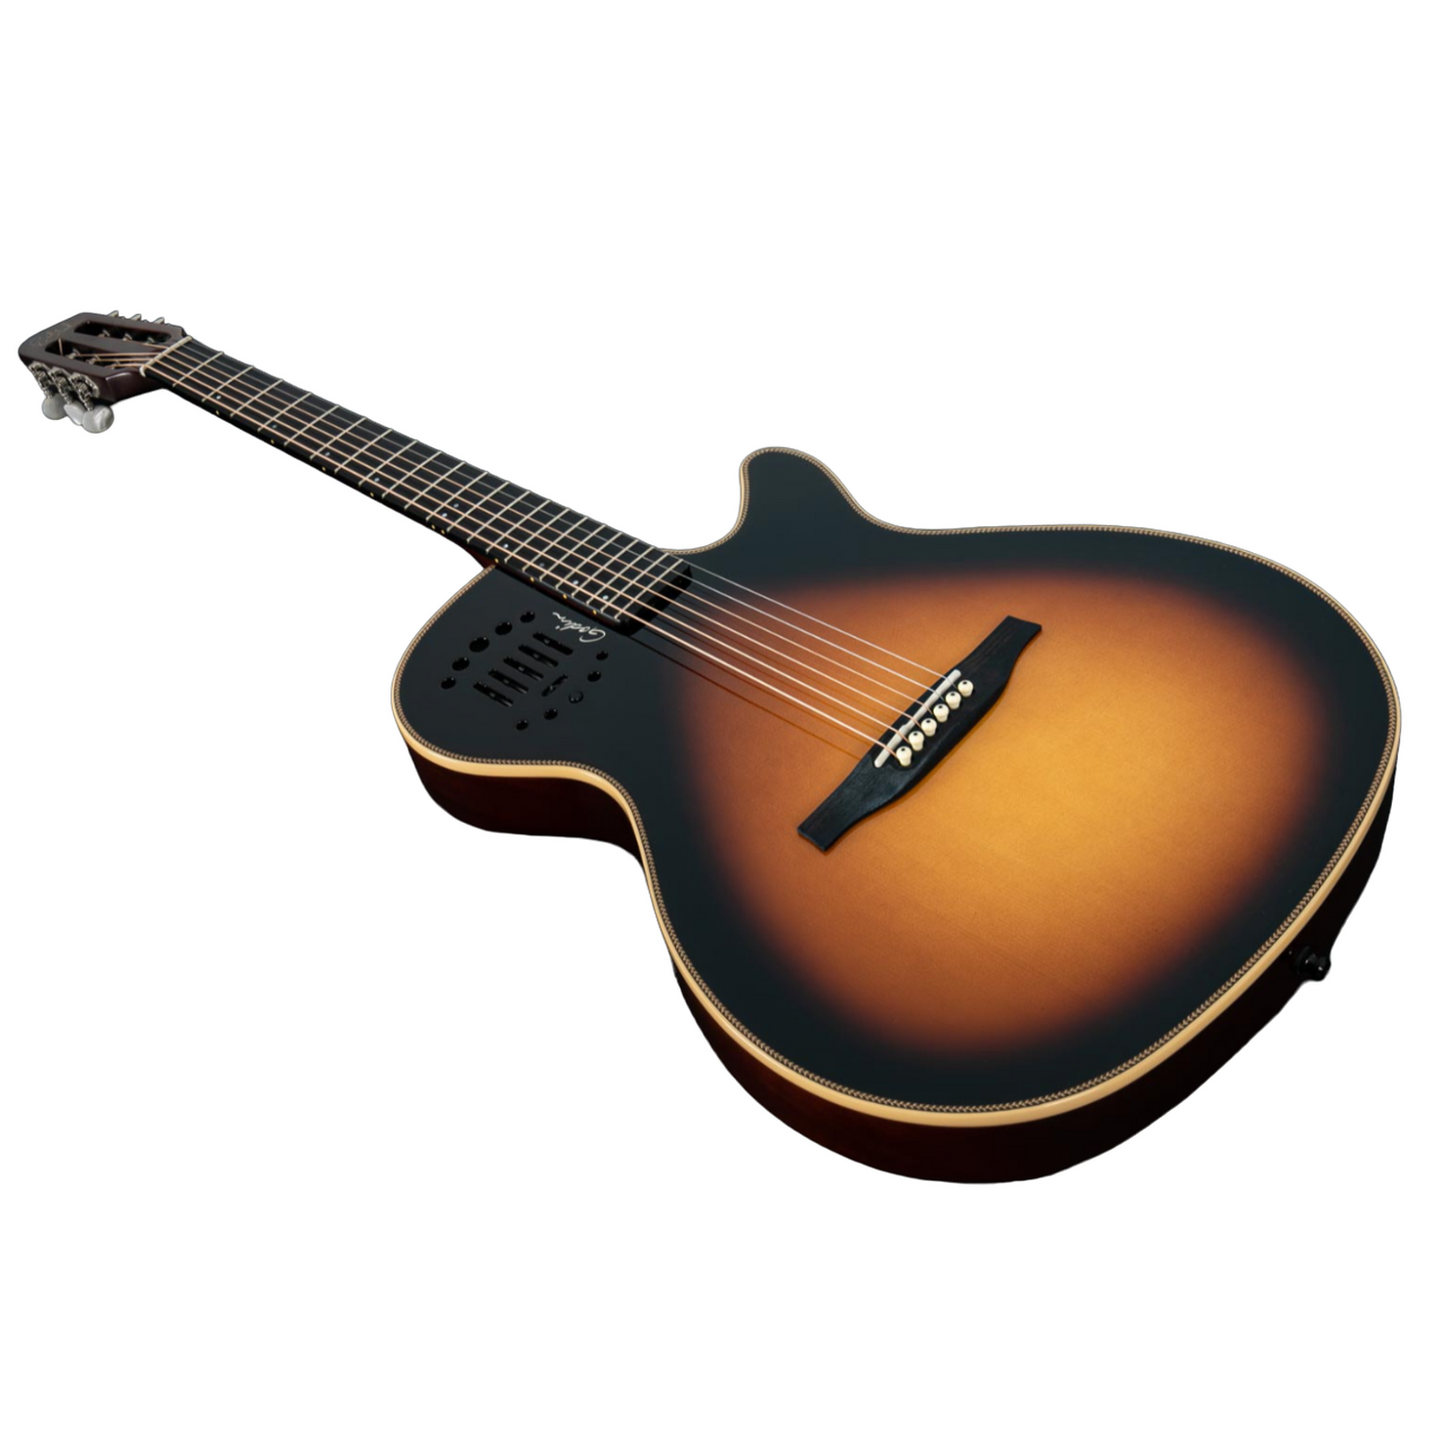 Guitarra Electroacústica Multiac Steel Duet Ambiance Sunburst HG 40735 GODIN